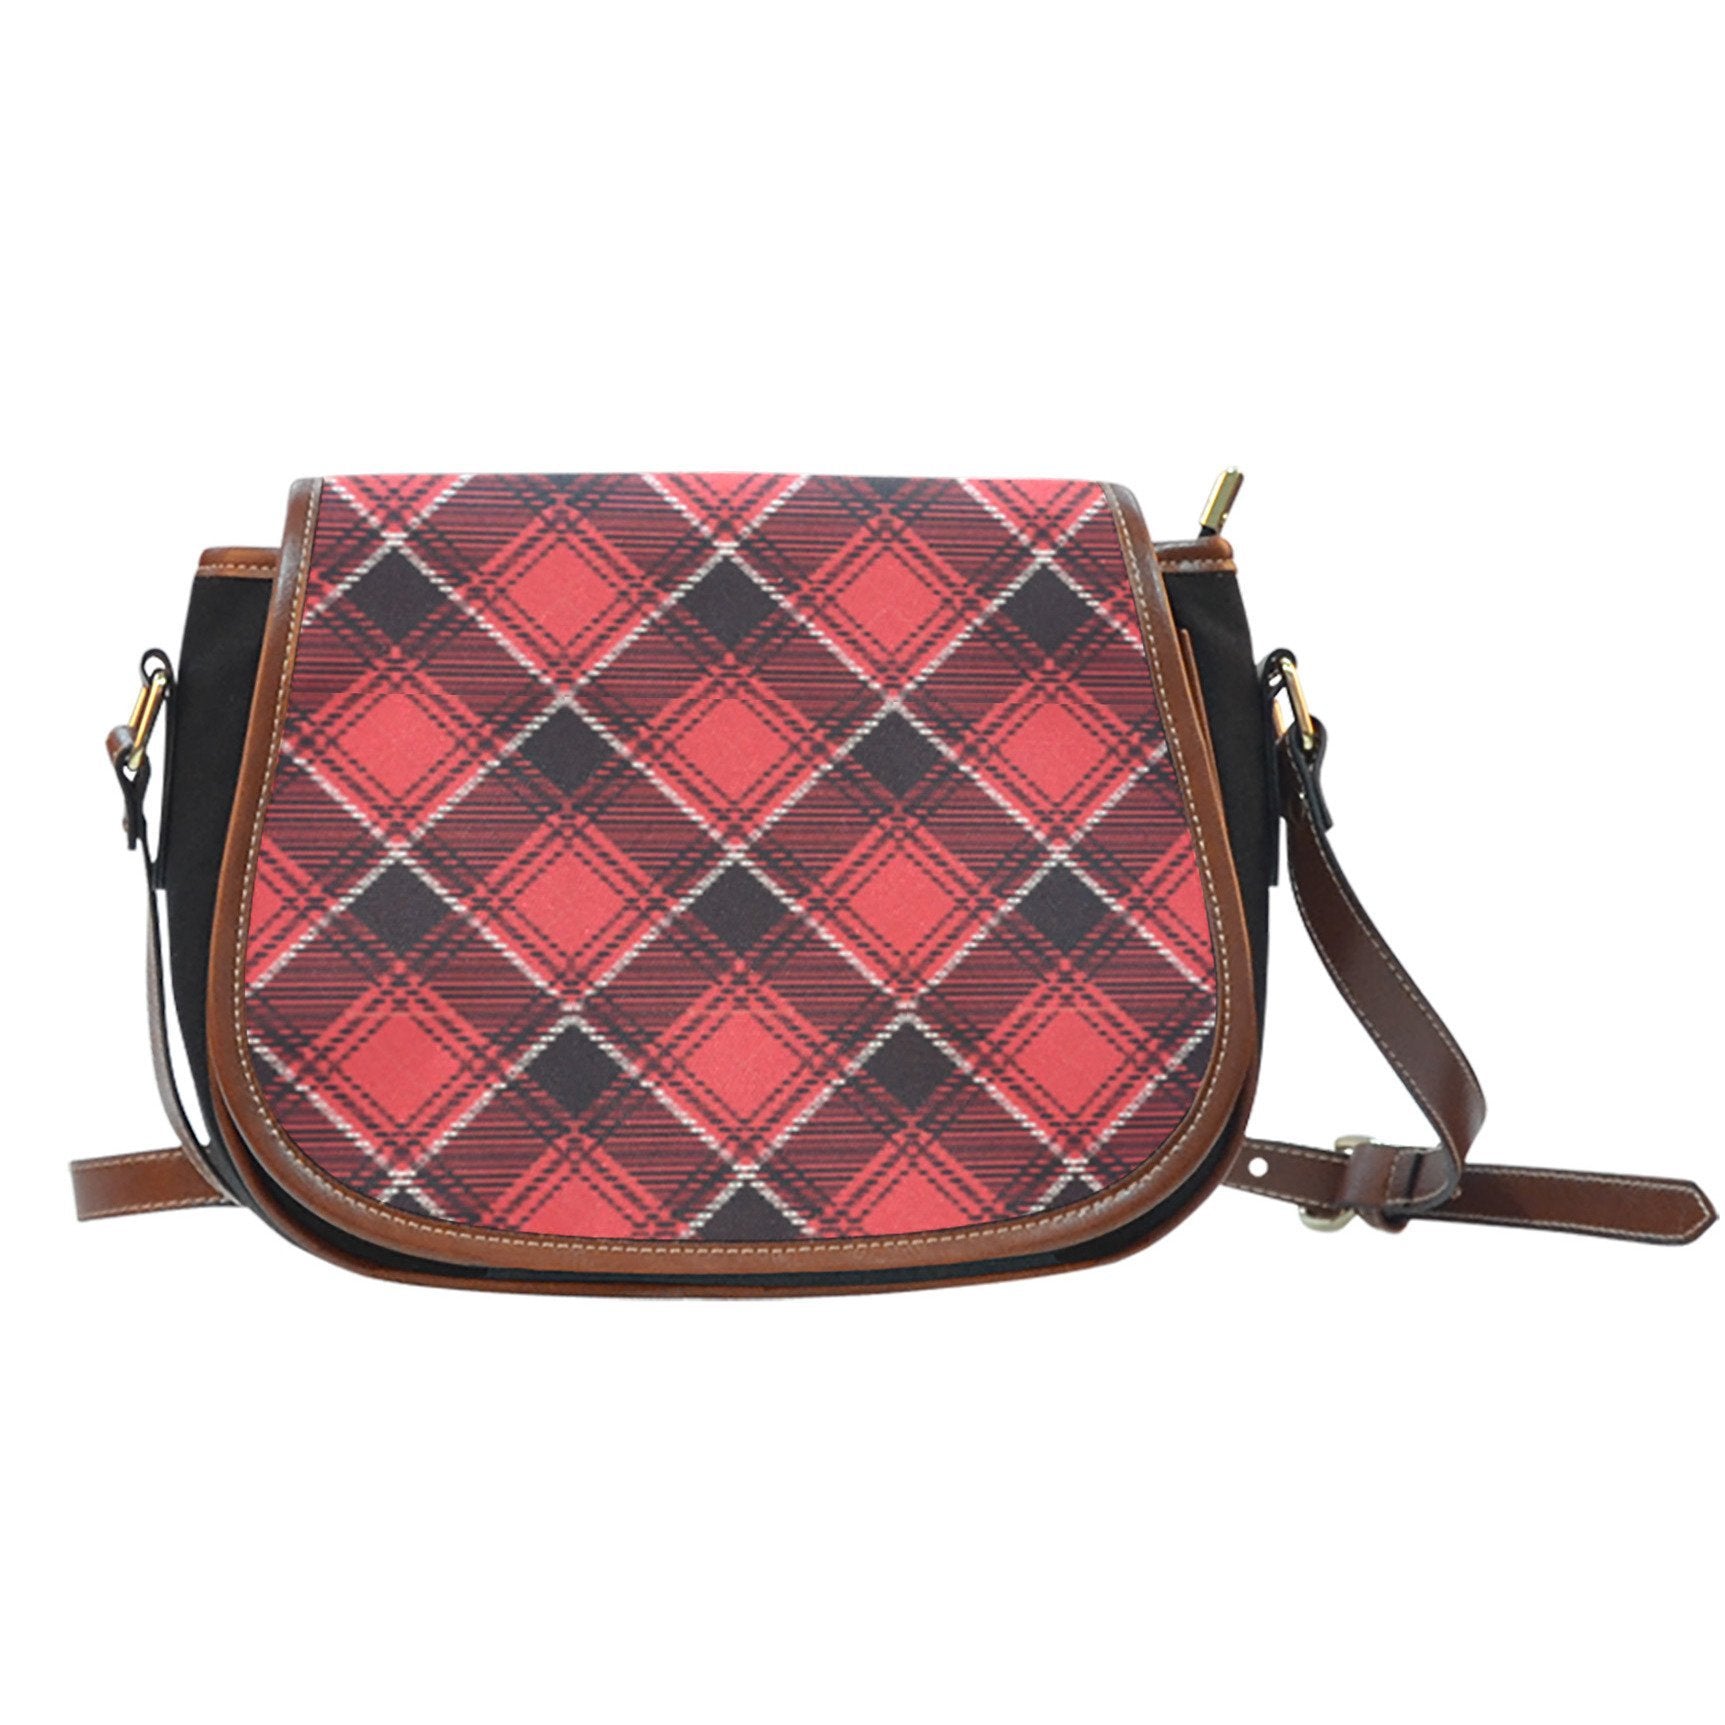 Tan black and red plaid purse. | Plaid purse, Black and red, Red plaid